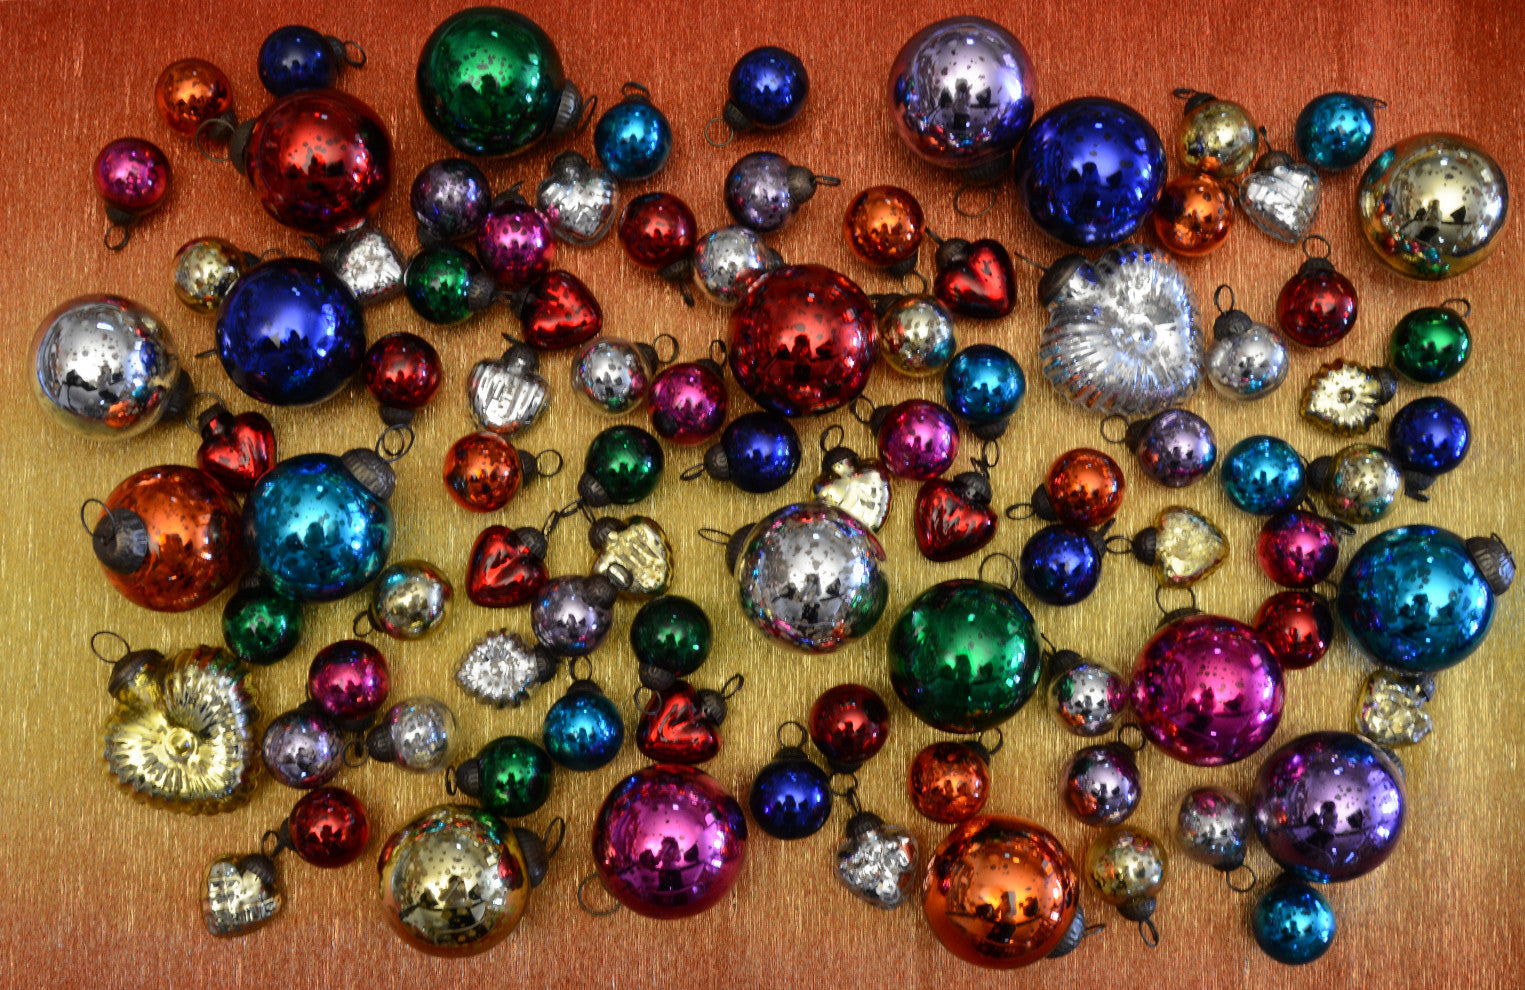 6 Pack | 1.5" Fuchsia Ava Mini Mercury Handcrafted Glass Balls Ornaments Christmas Tree Decoration